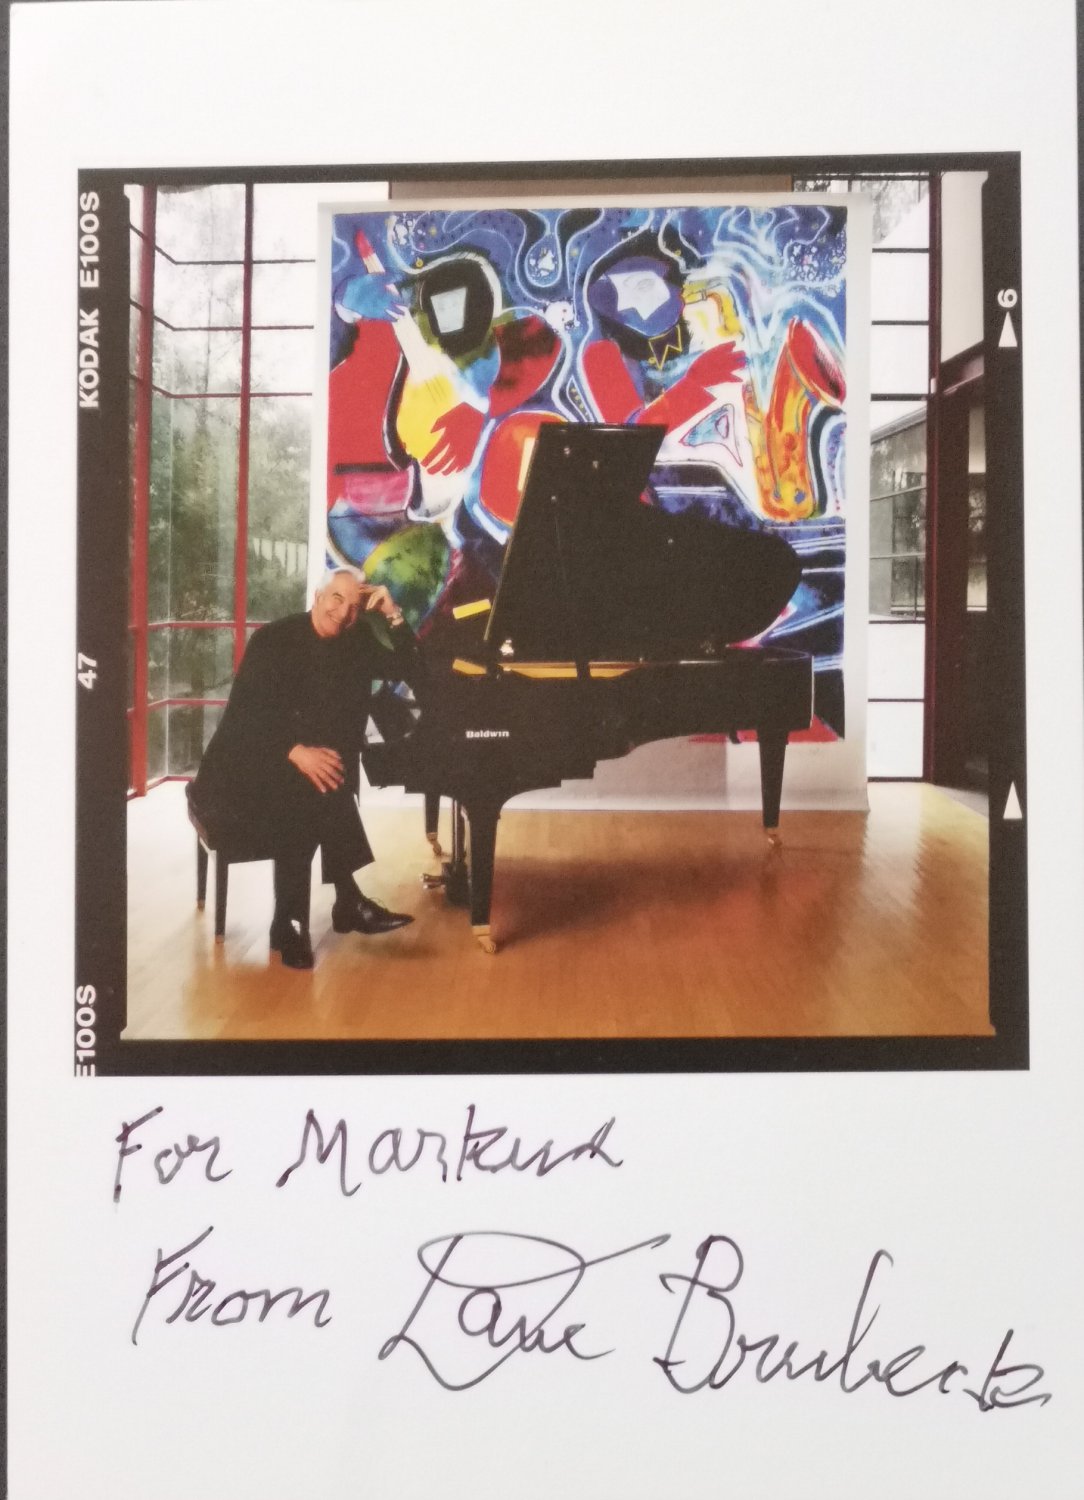 Dave Brubeck, Jazz Pianist Composer, Original Autograph, Guaranted Authentic